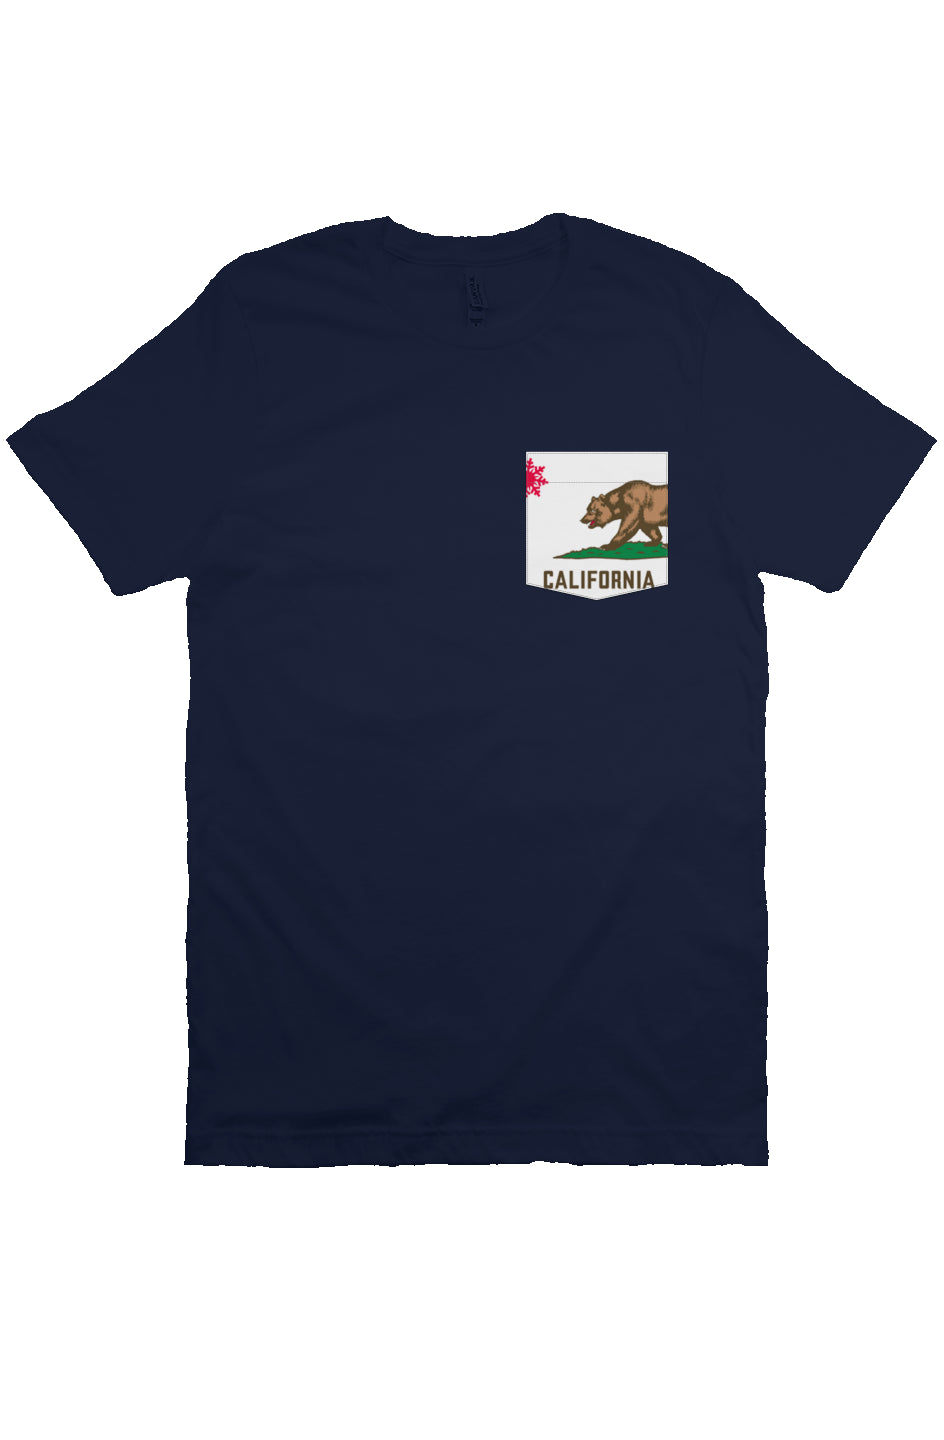 Odyssey T-Shirt = California Style = Deep Blue Sea